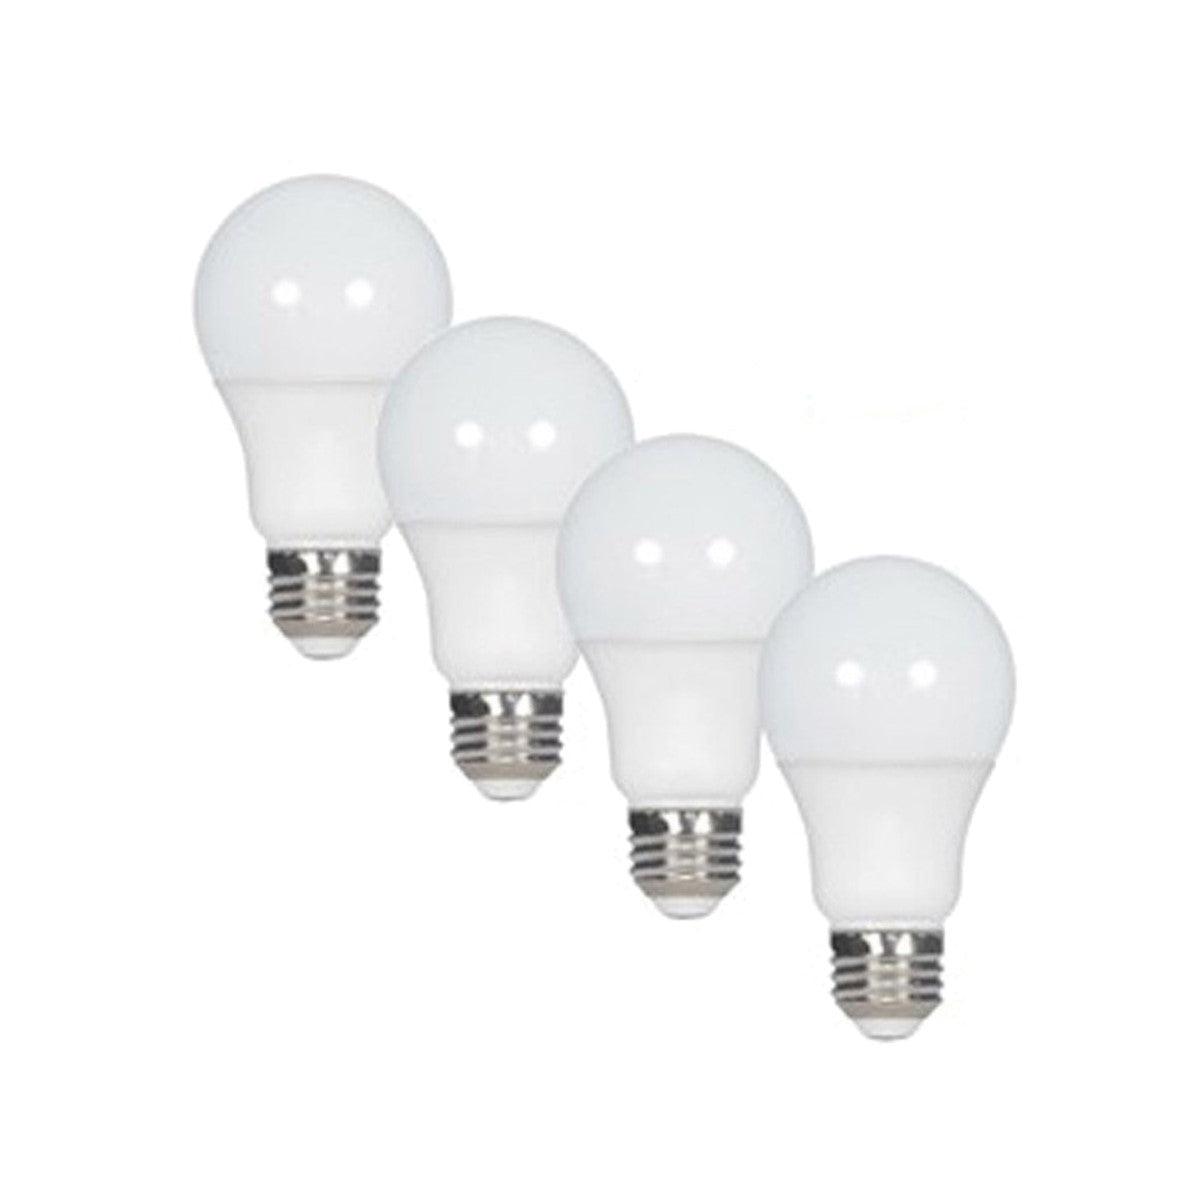 A19 LED Bulb, 100W Equivalent, 16 Watt, 1490 Lumens, 4000K, E26 Medium Base, Frosted Finish, Pack Of 4